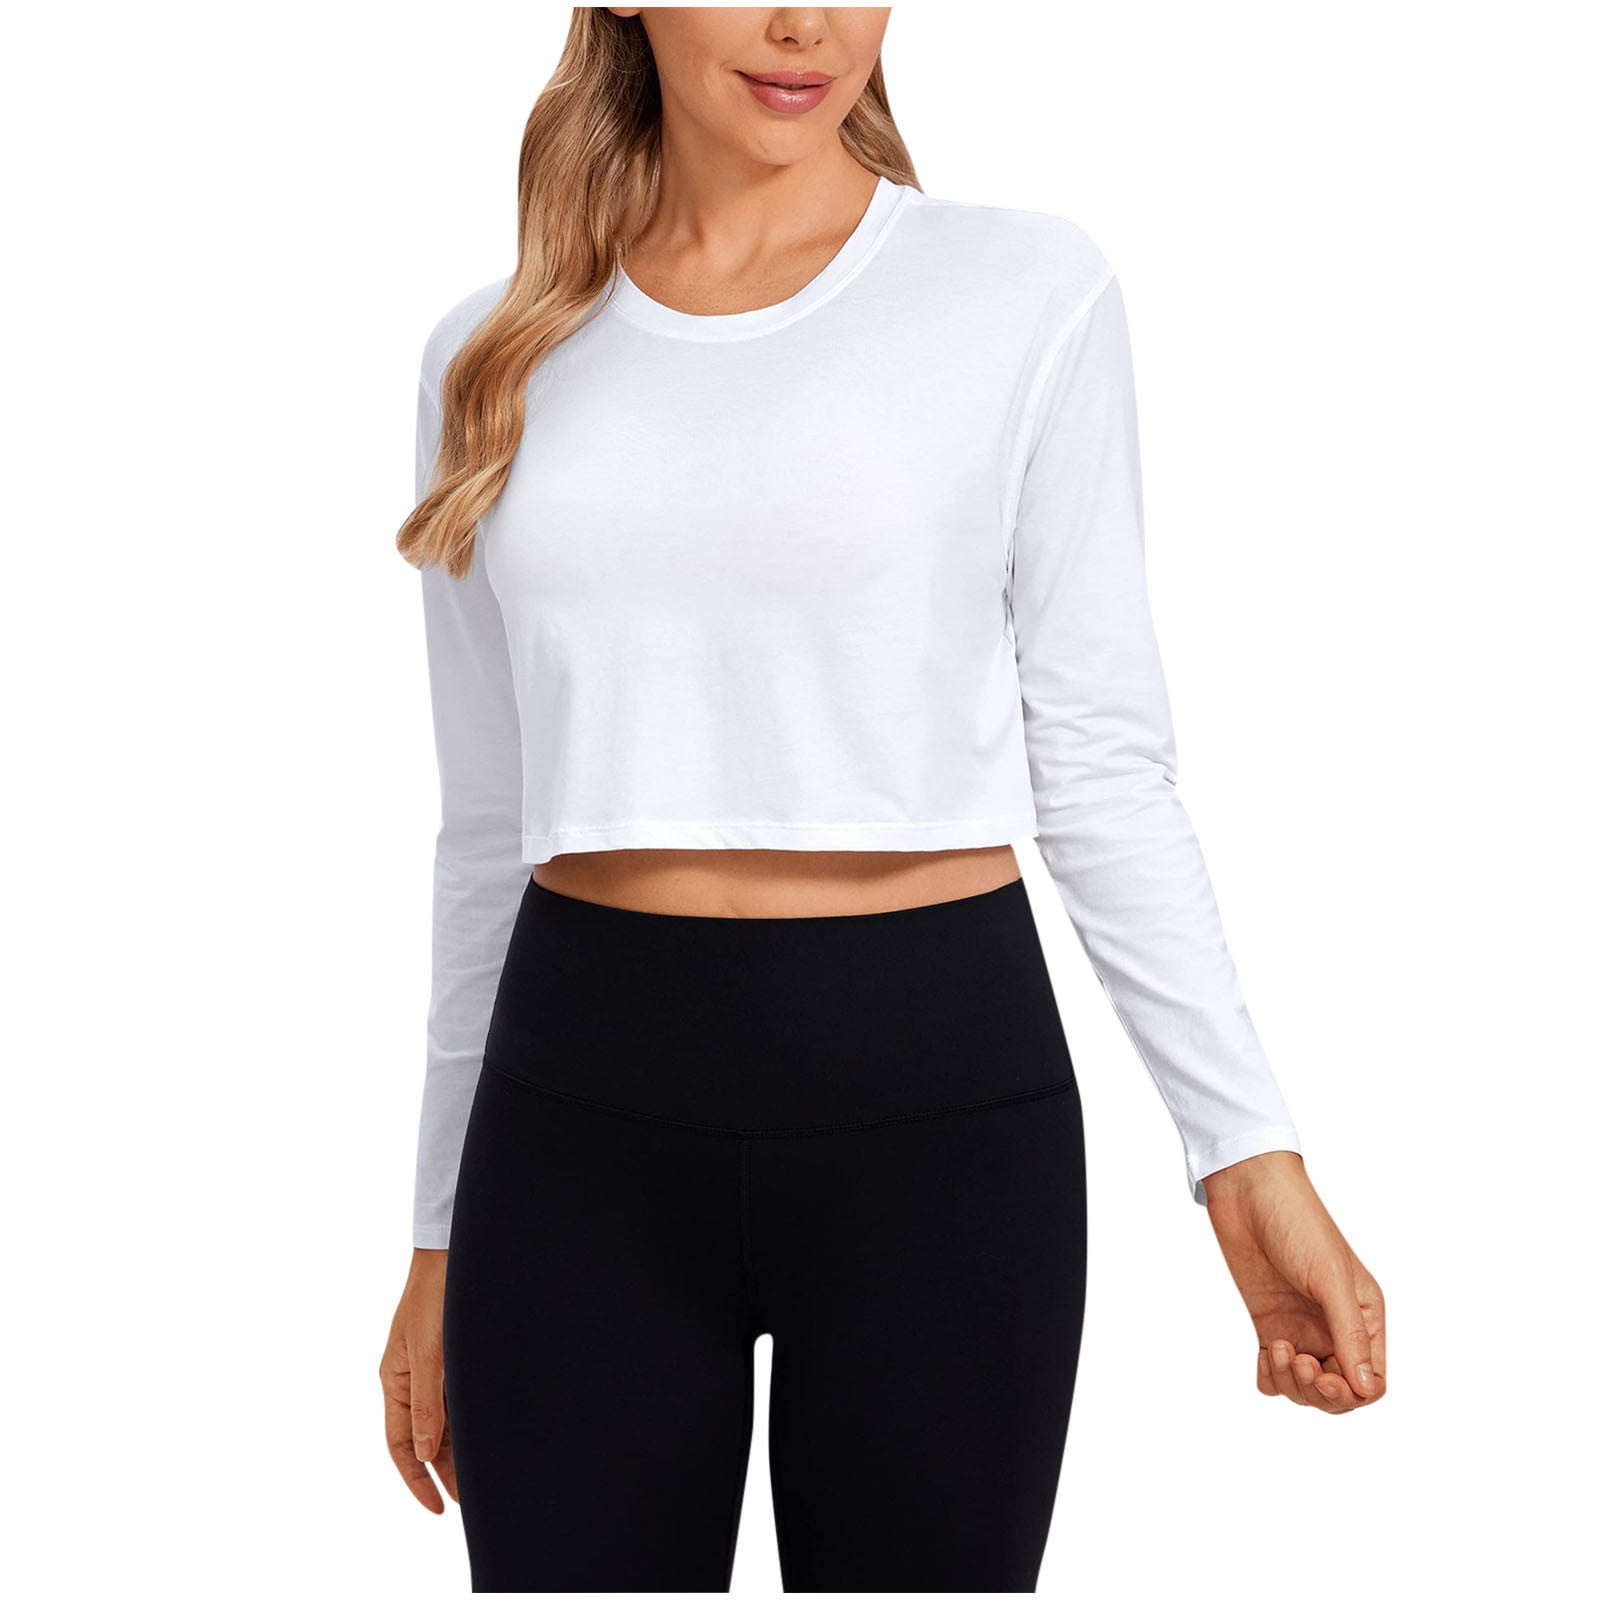 XFLWAM Cotton Long Sleeve Shirts for Women Workout Crop Tops Loose